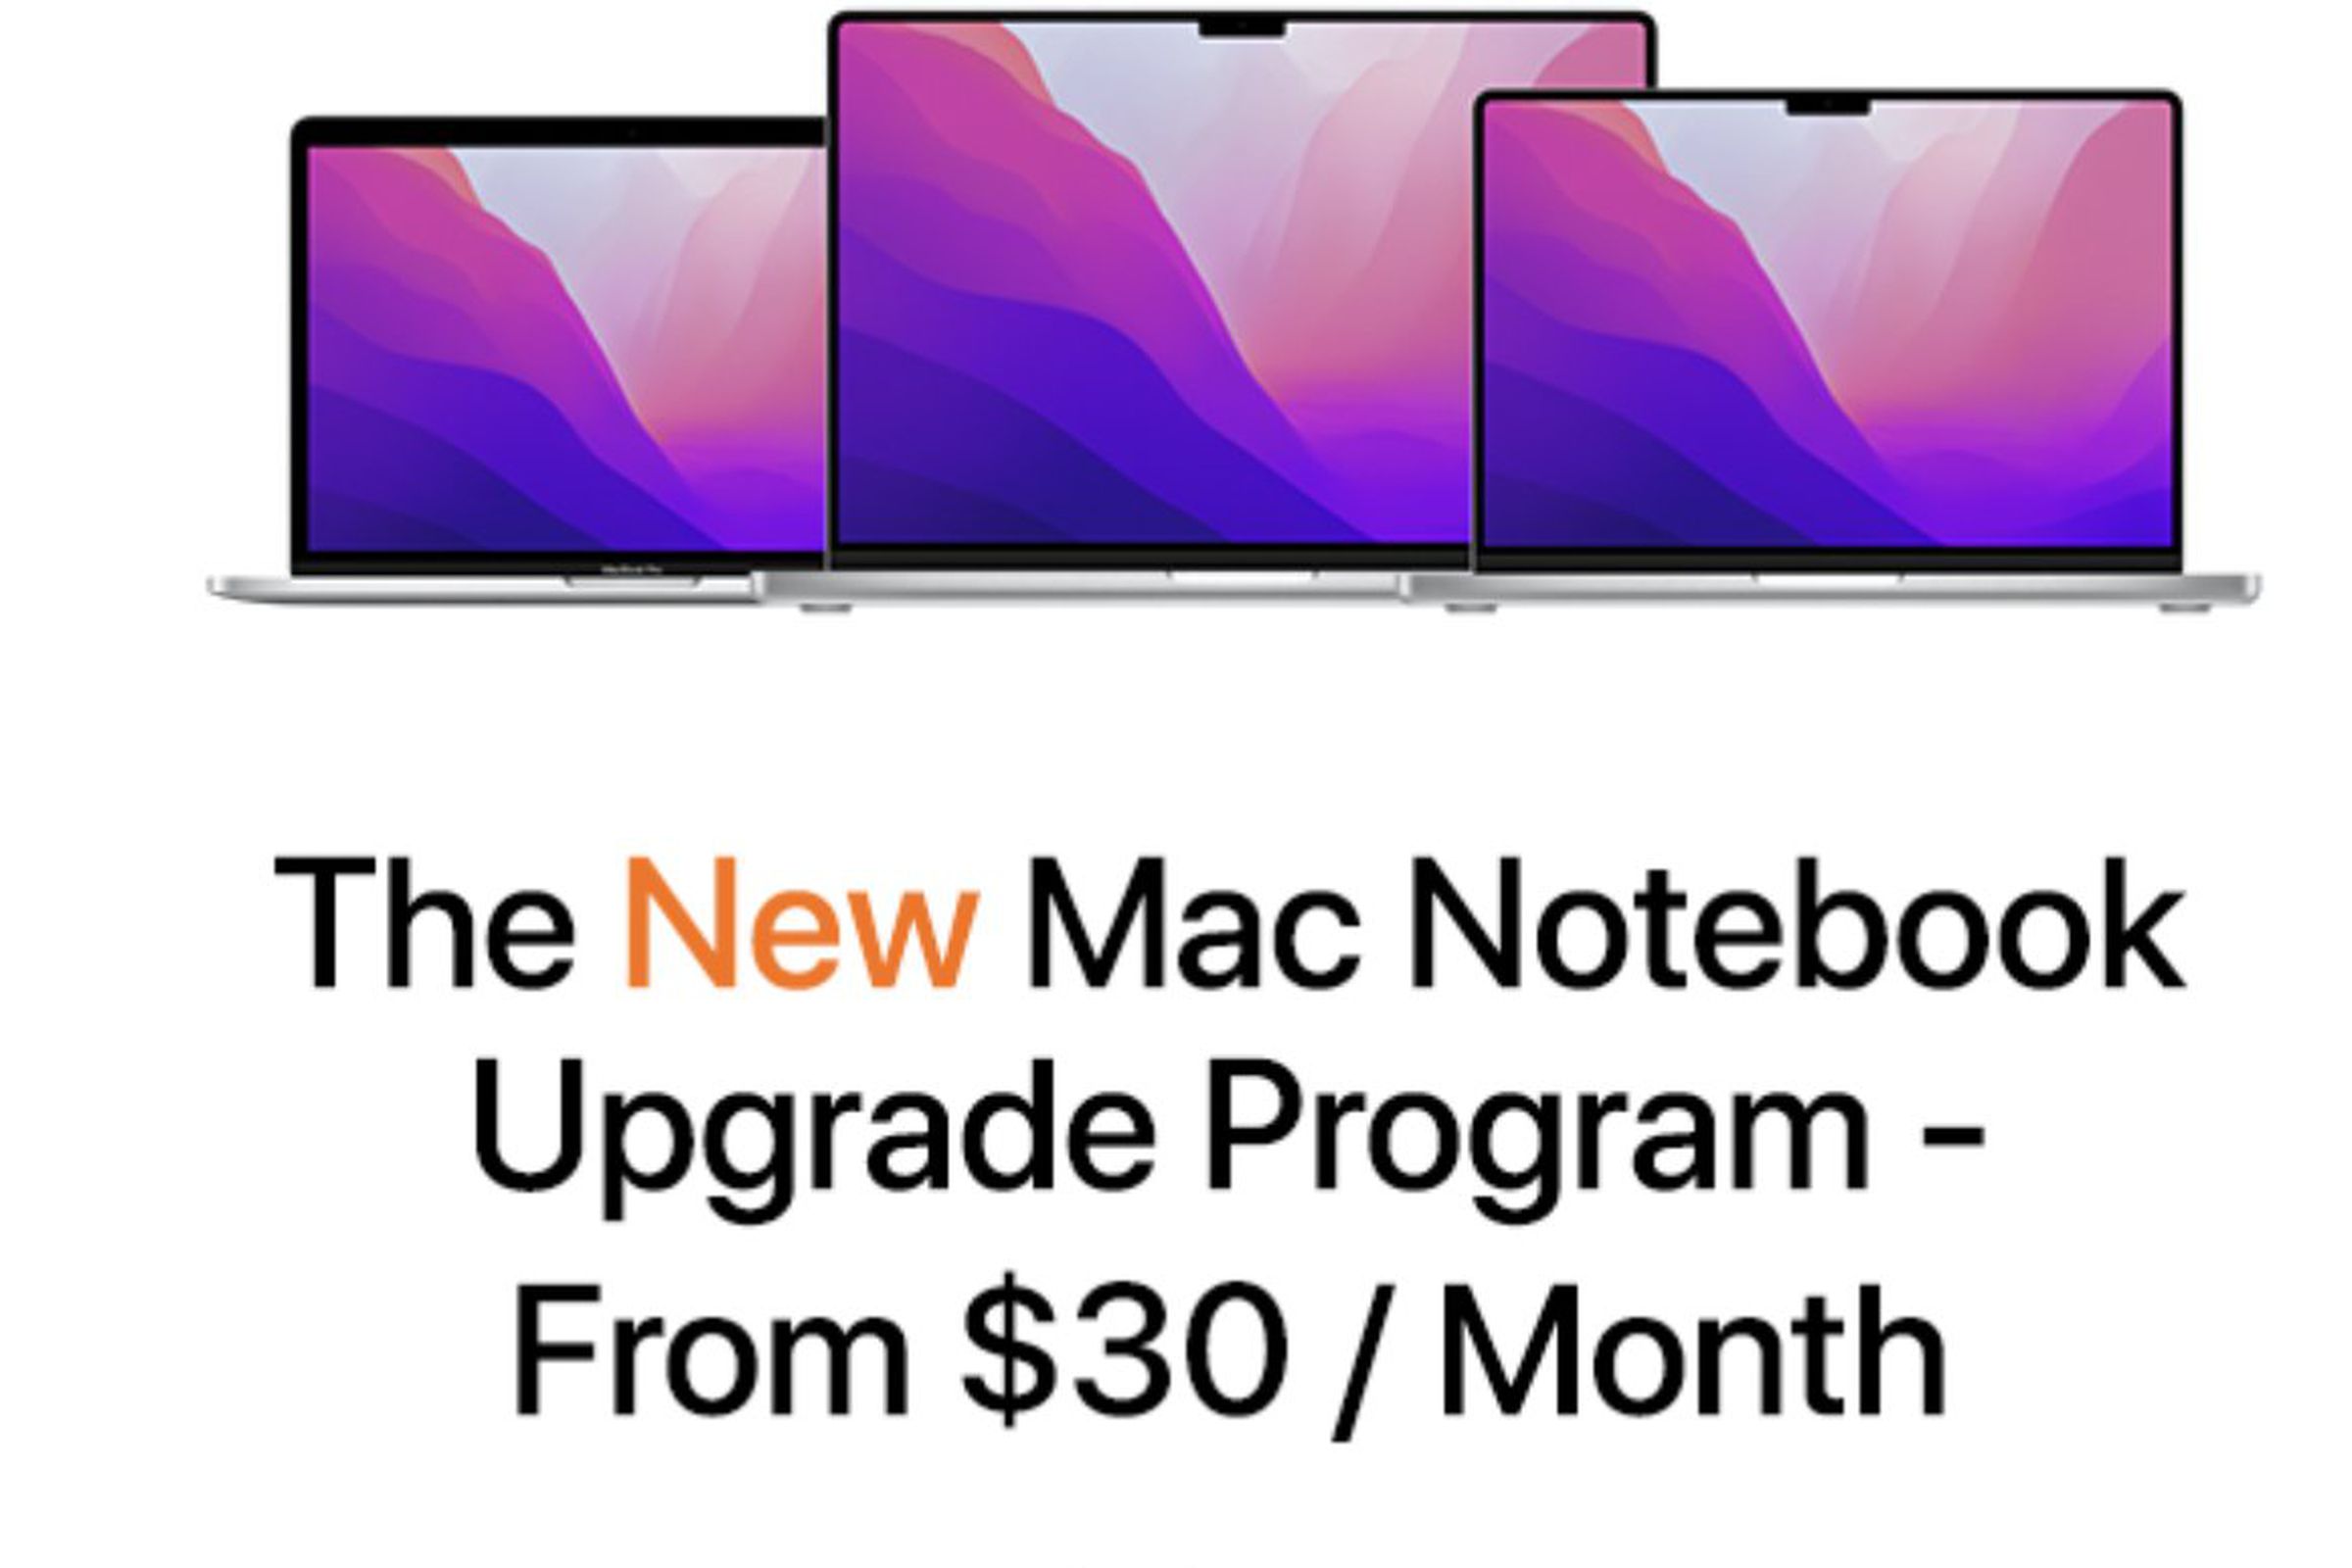 An Apple ad highlighting its $30 per month Mac upgrade program